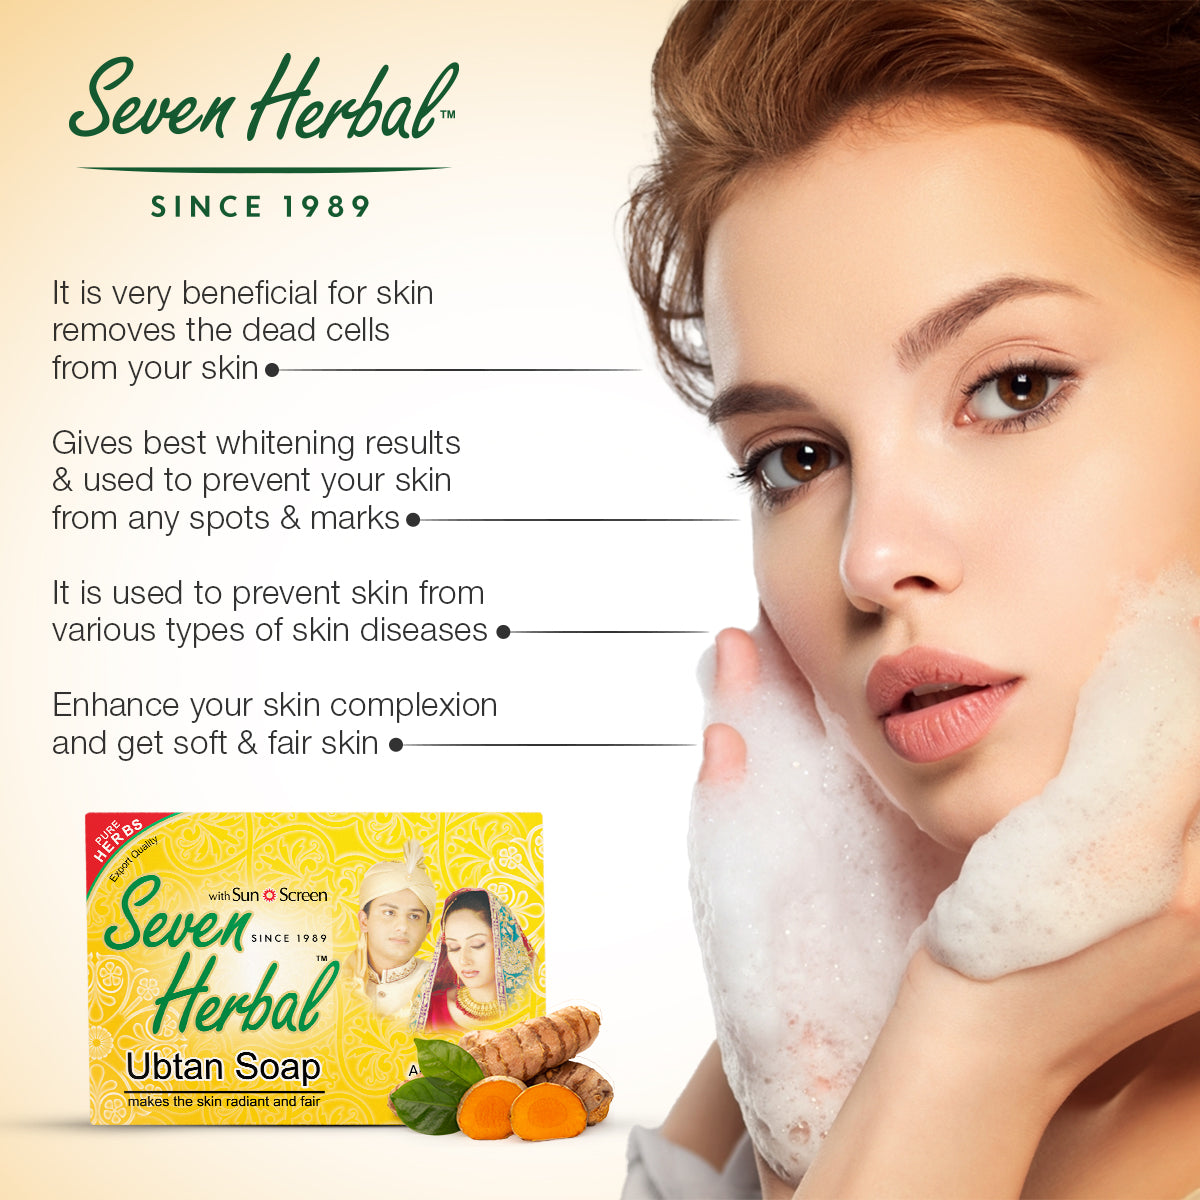 Seven Herbal Ubtan Soap with Sun Screen